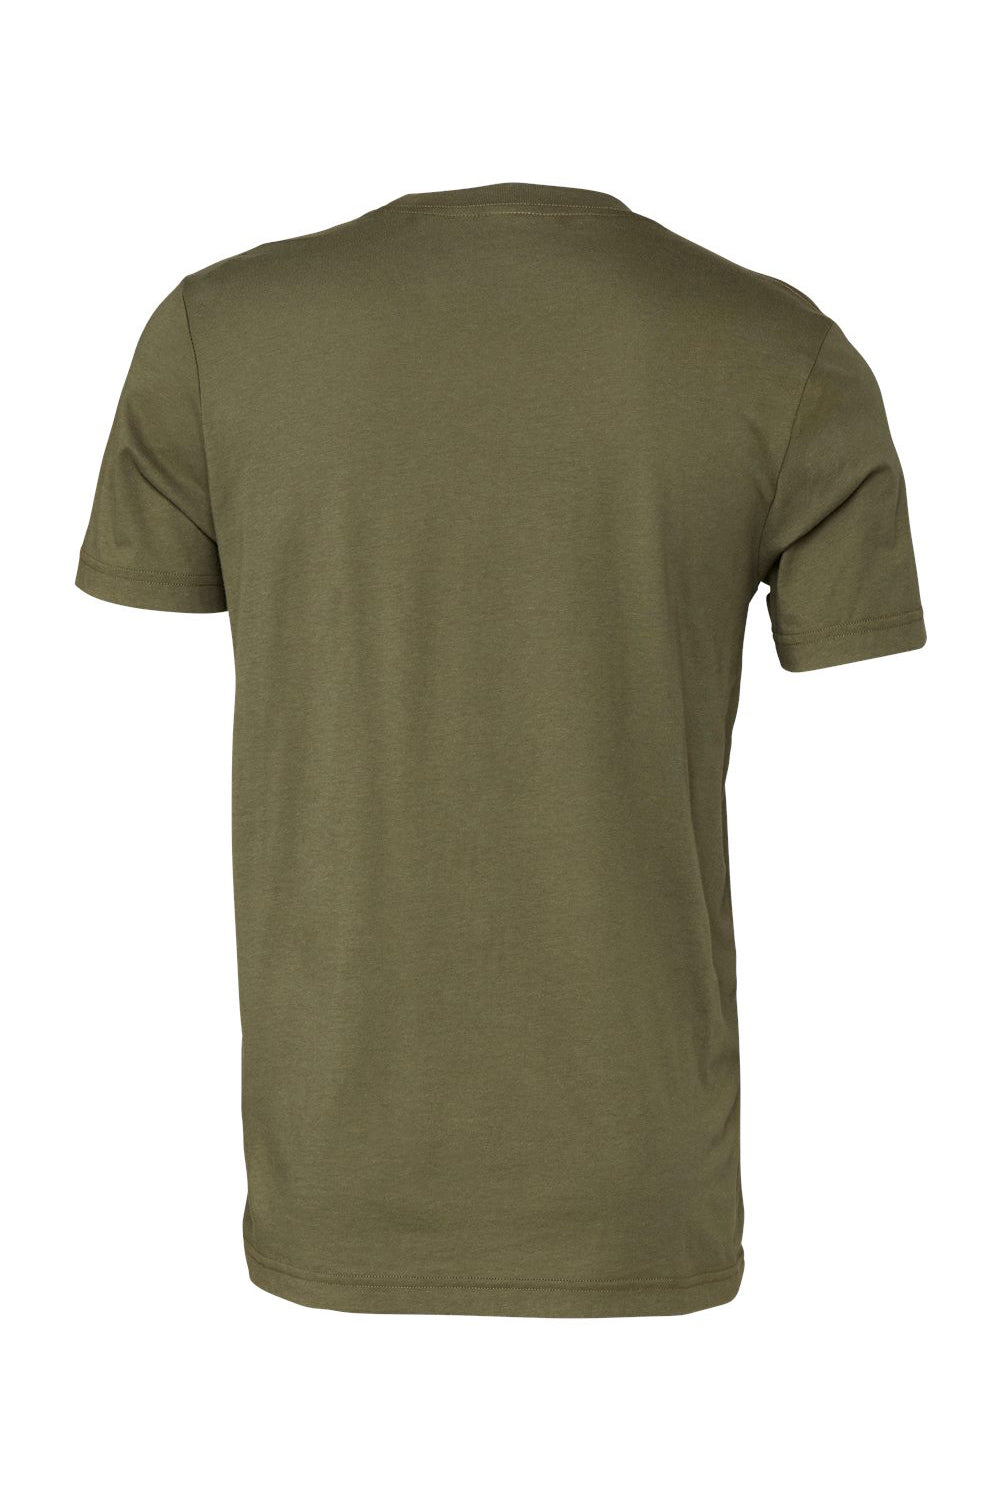 Bella + Canvas BC3001/3001C Mens Jersey Short Sleeve Crewneck T-Shirt Military Green Flat Back